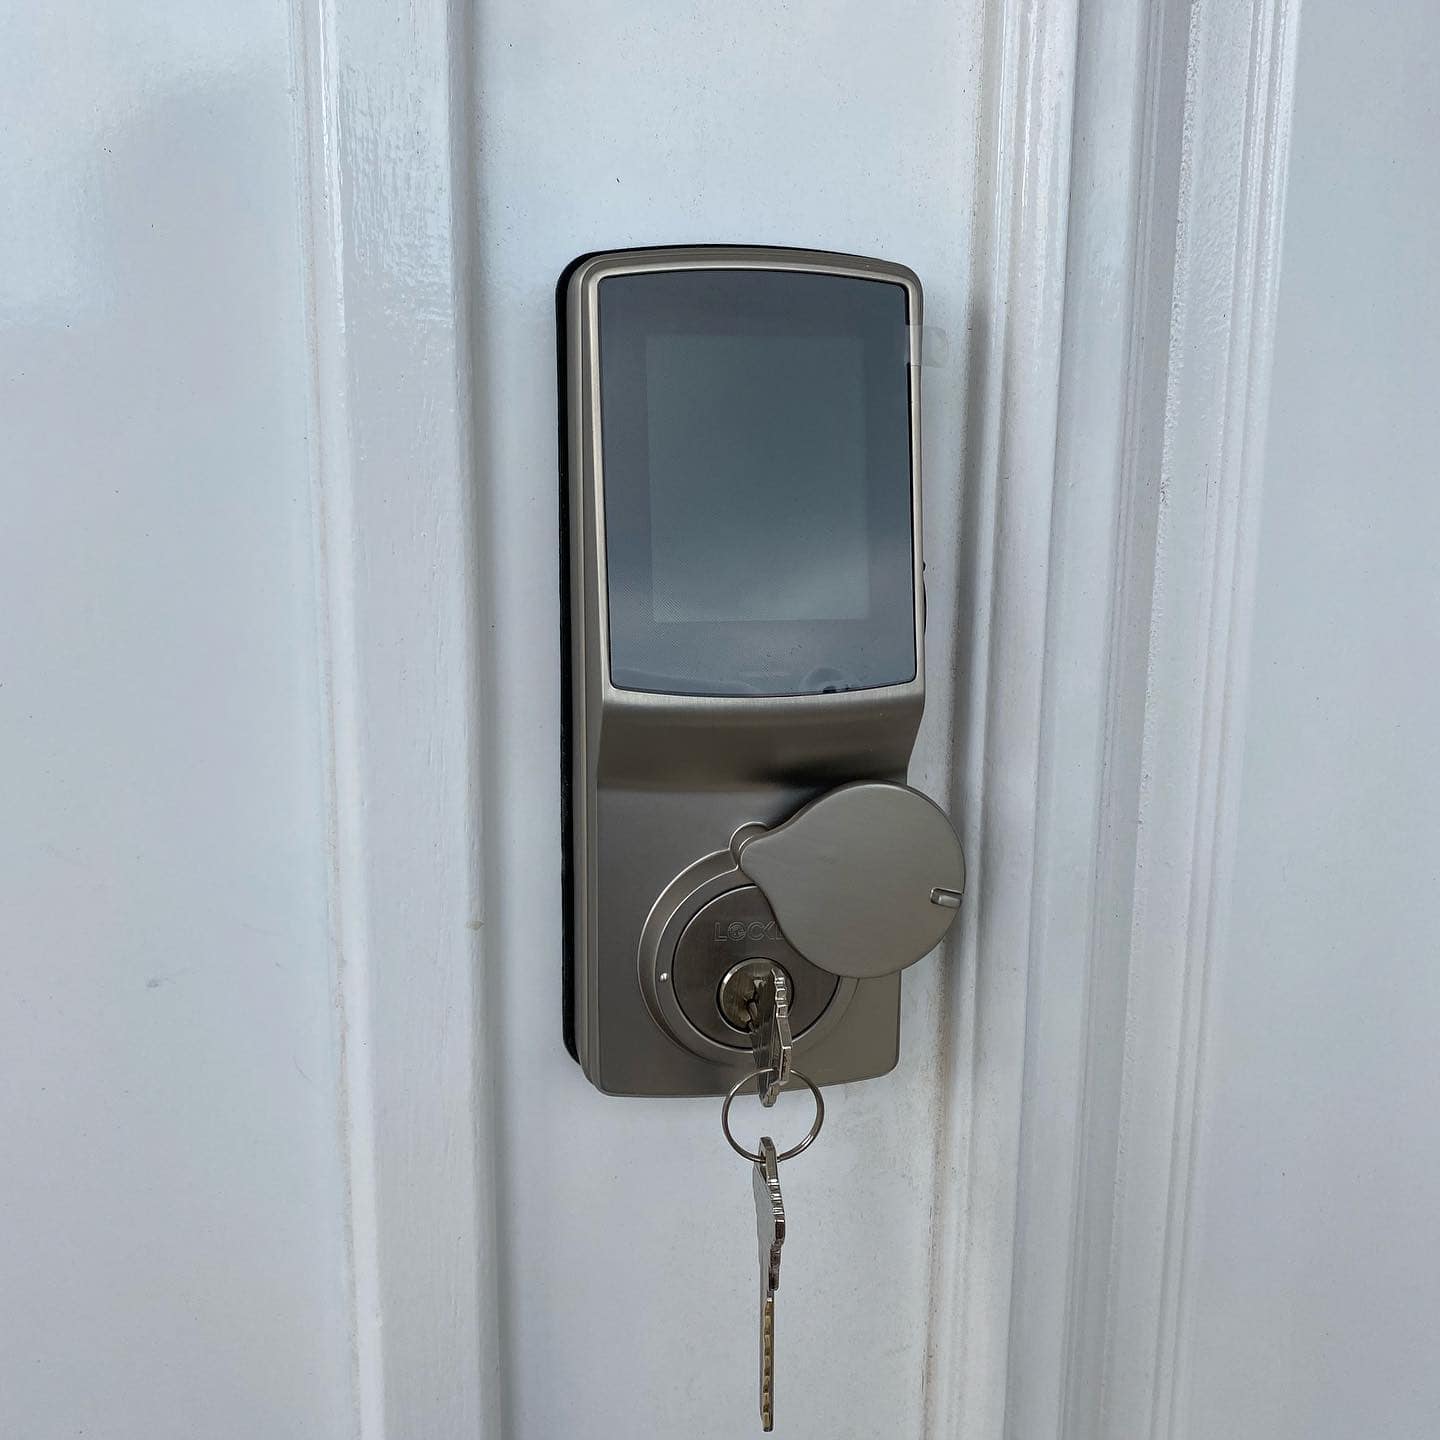 Lockly smart lock with a regular key option